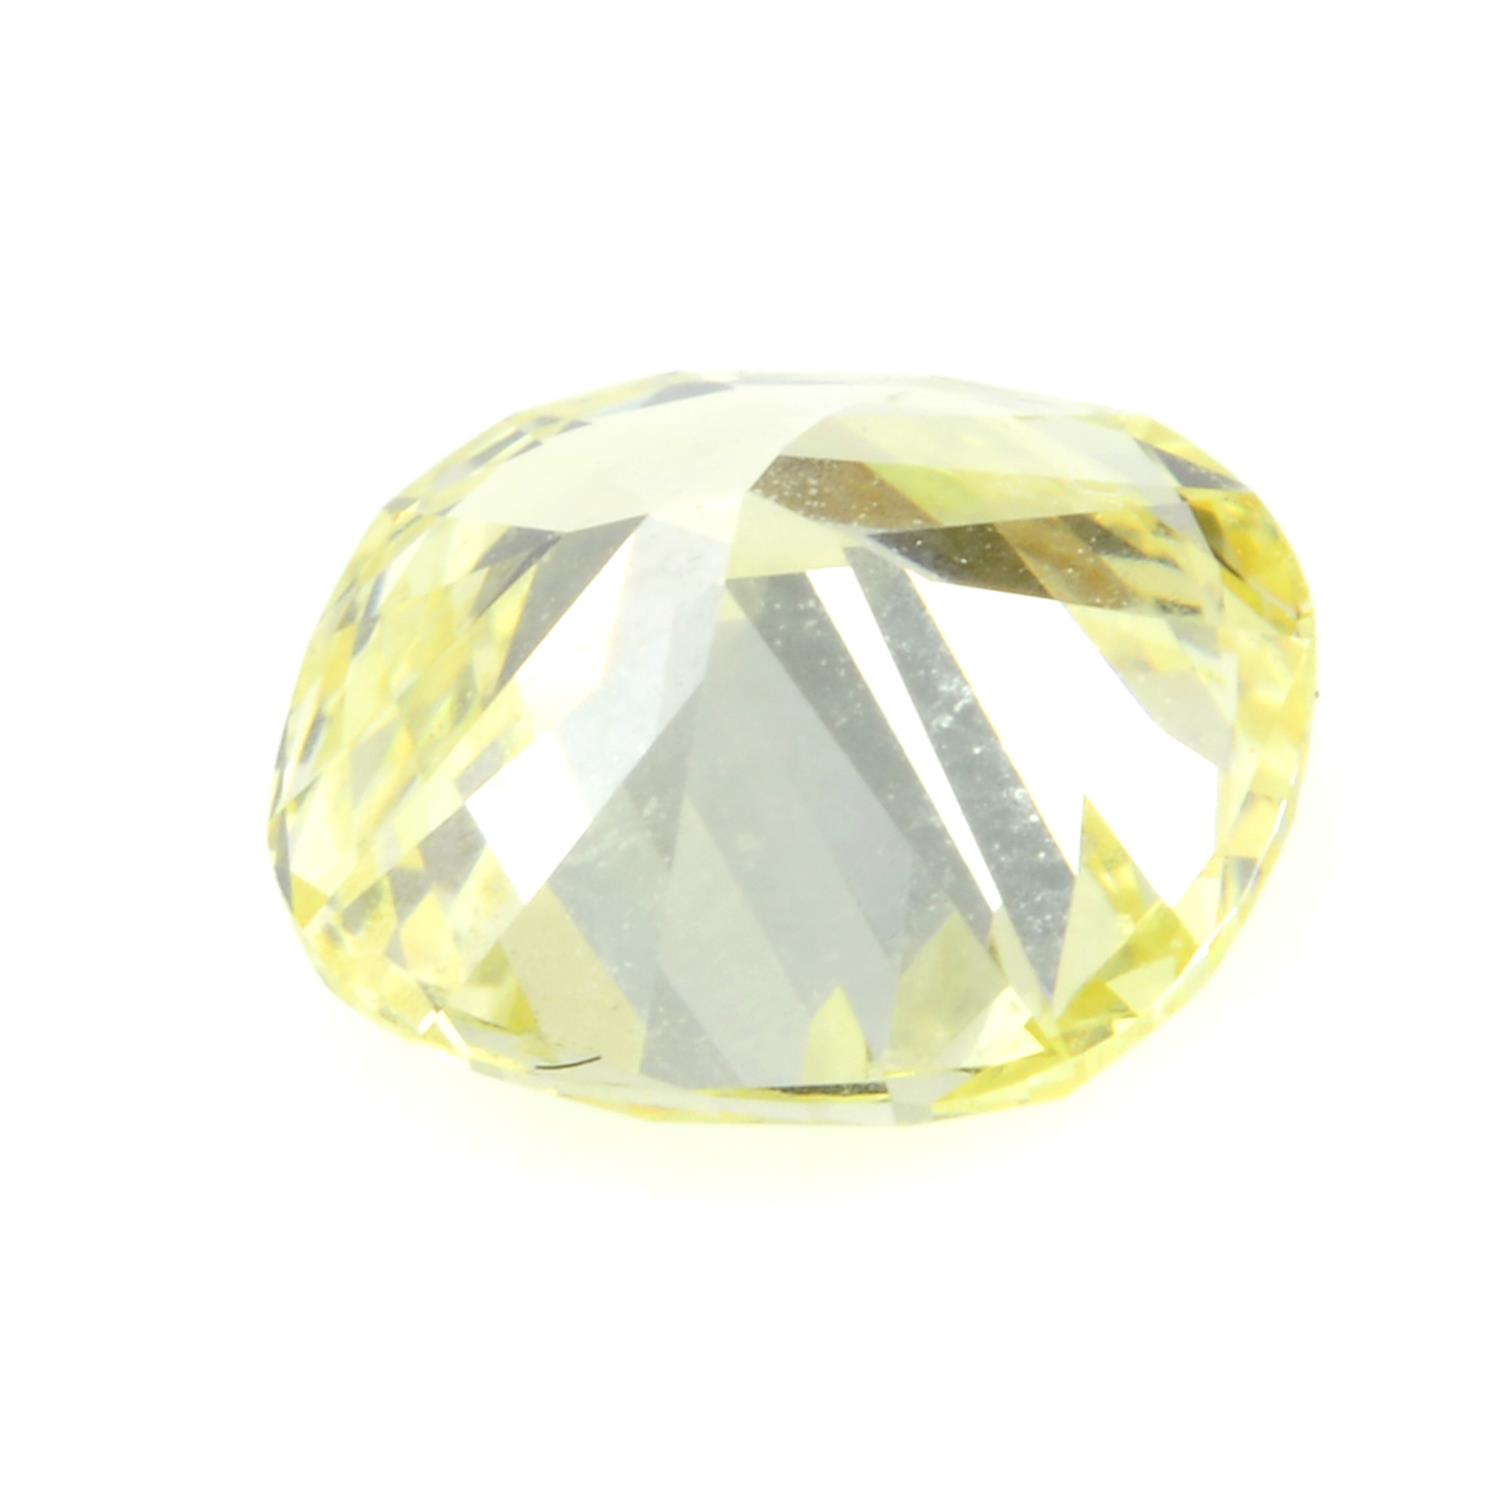 A cushion cut fancy yellow diamond, weighing 0.73ct - Image 2 of 3